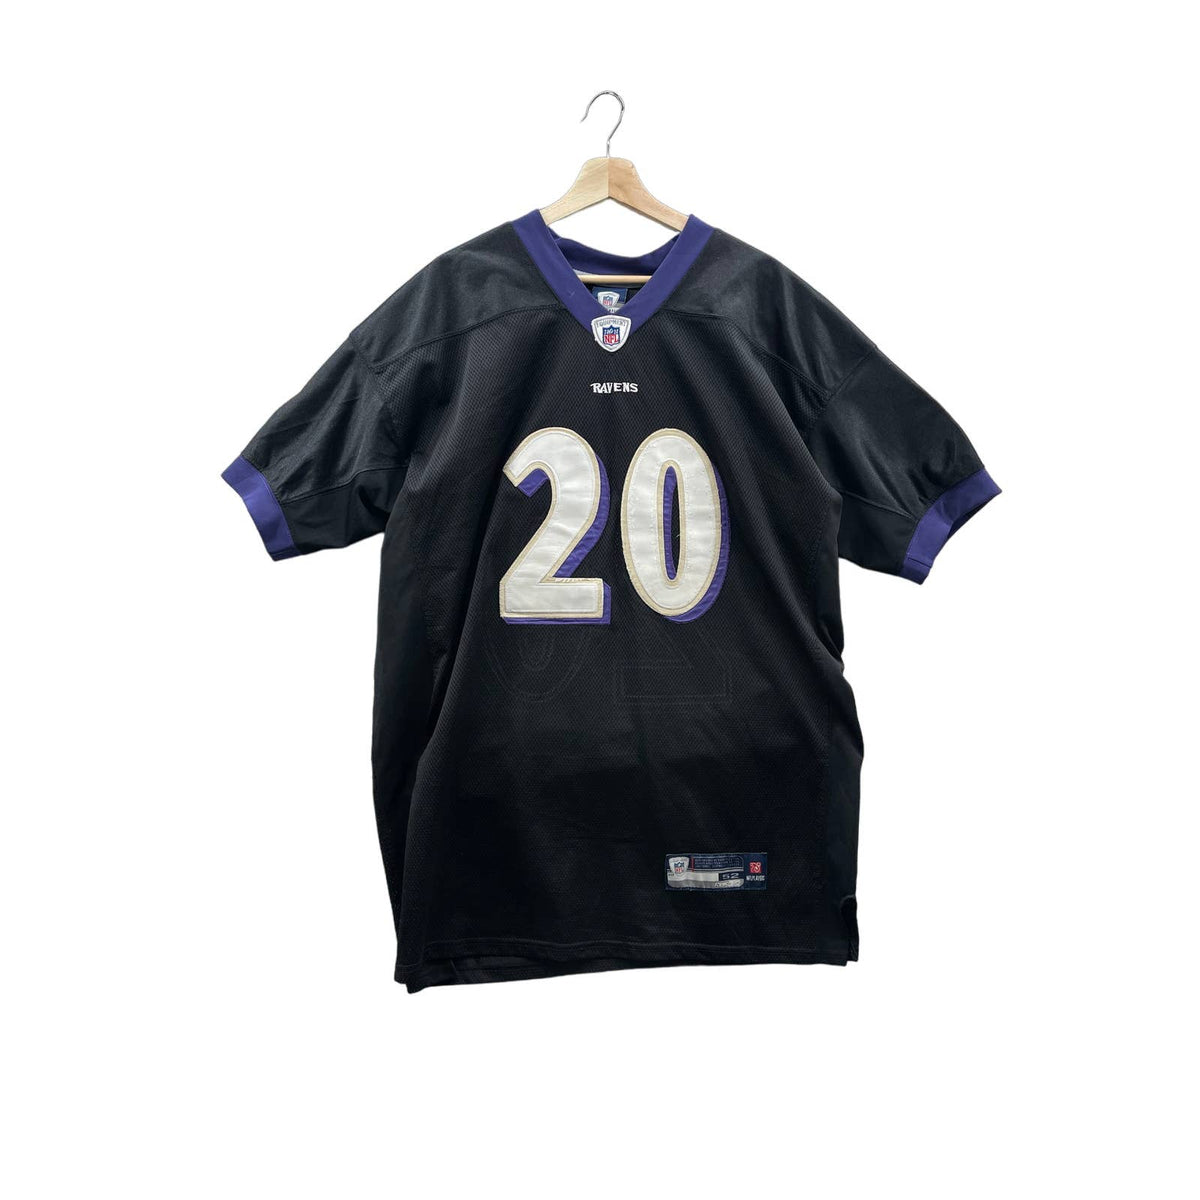 Vintage 2000's Reebok Baltimore Ravens Ed Reed NFL Football Jersey